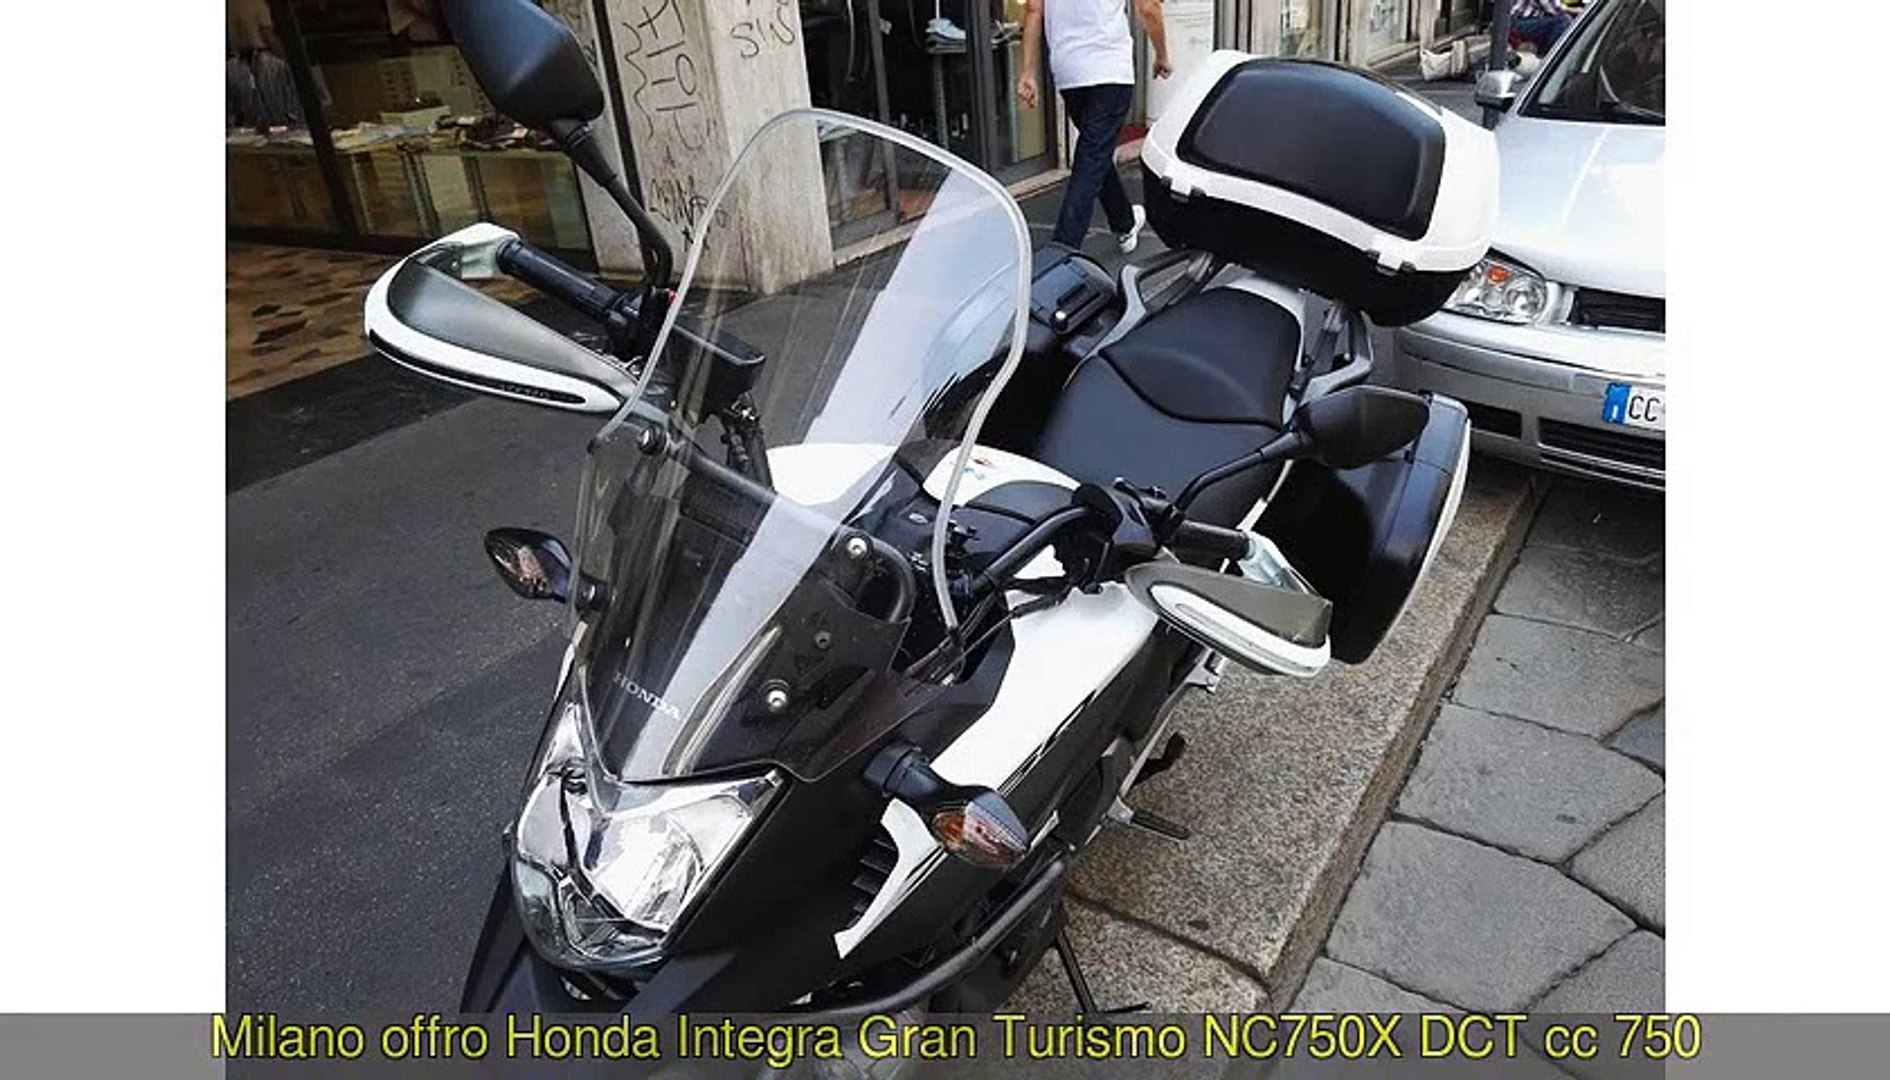 HONDA Integra Gran Turismo cc 750 - Video Dailymotion